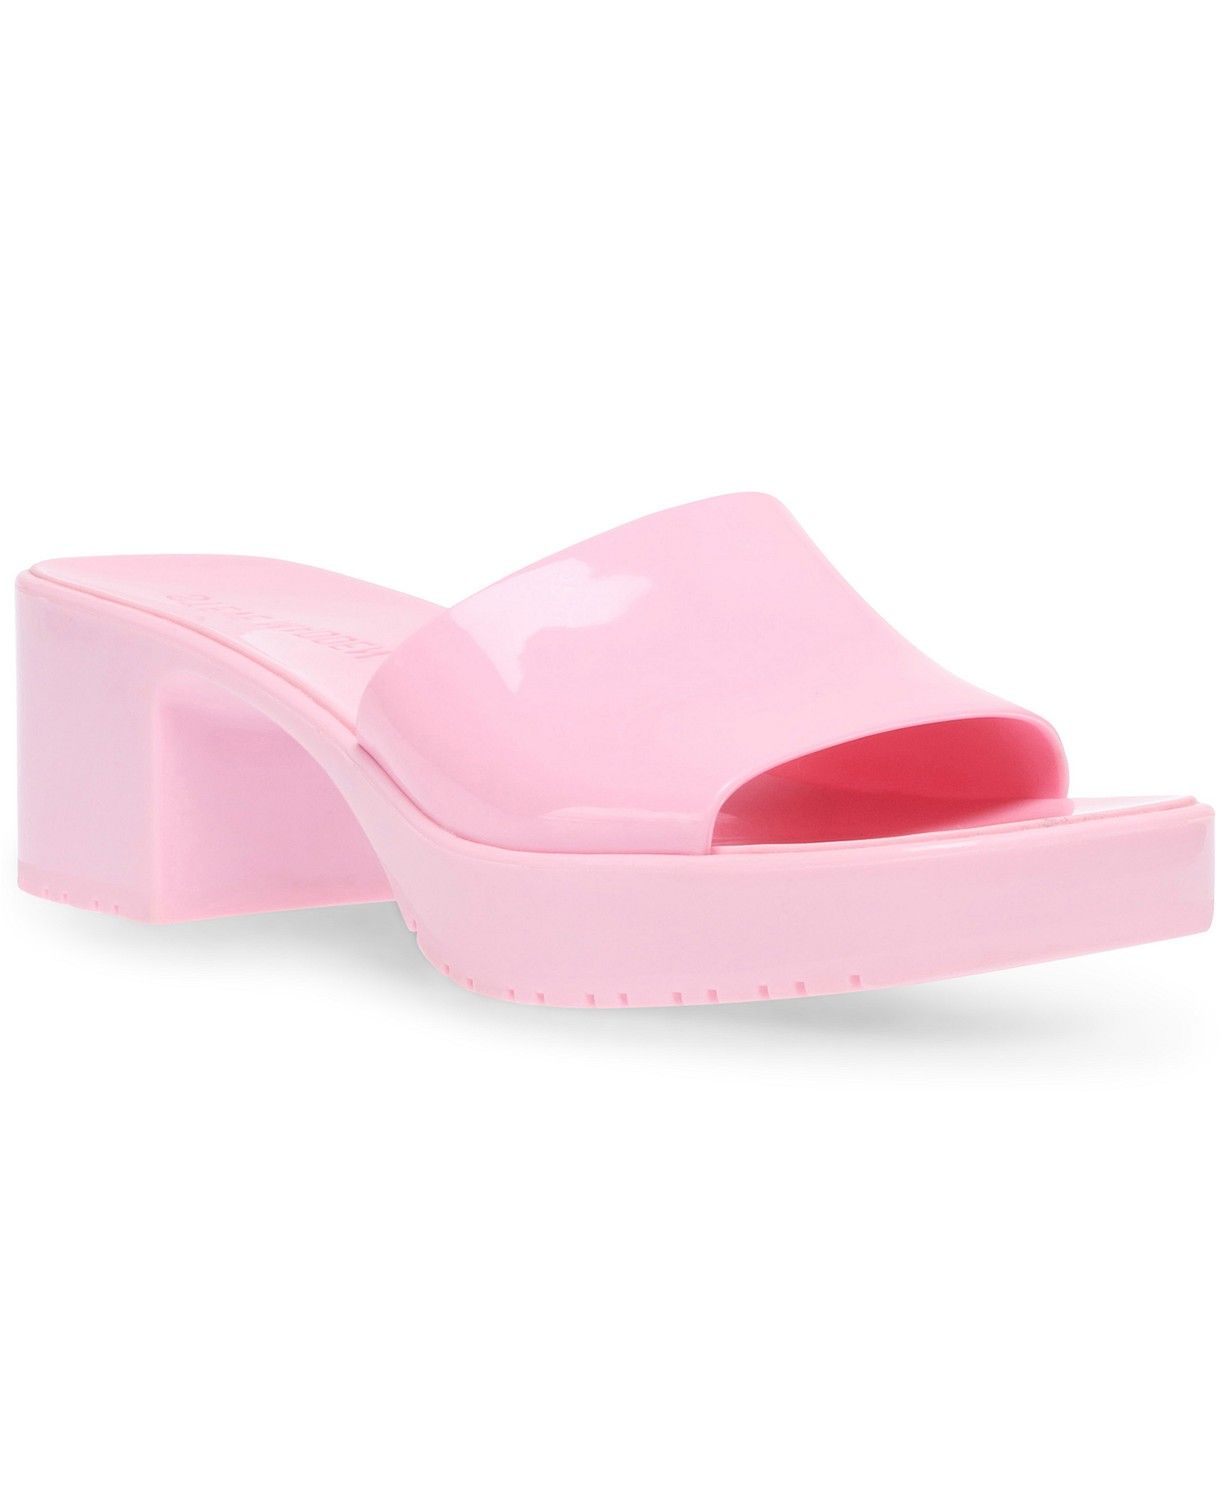 Steve Madden Women's Harlin Jelly Block-Heel Sandals & Reviews - Sandals - Shoes - Macy's | Macys (US)